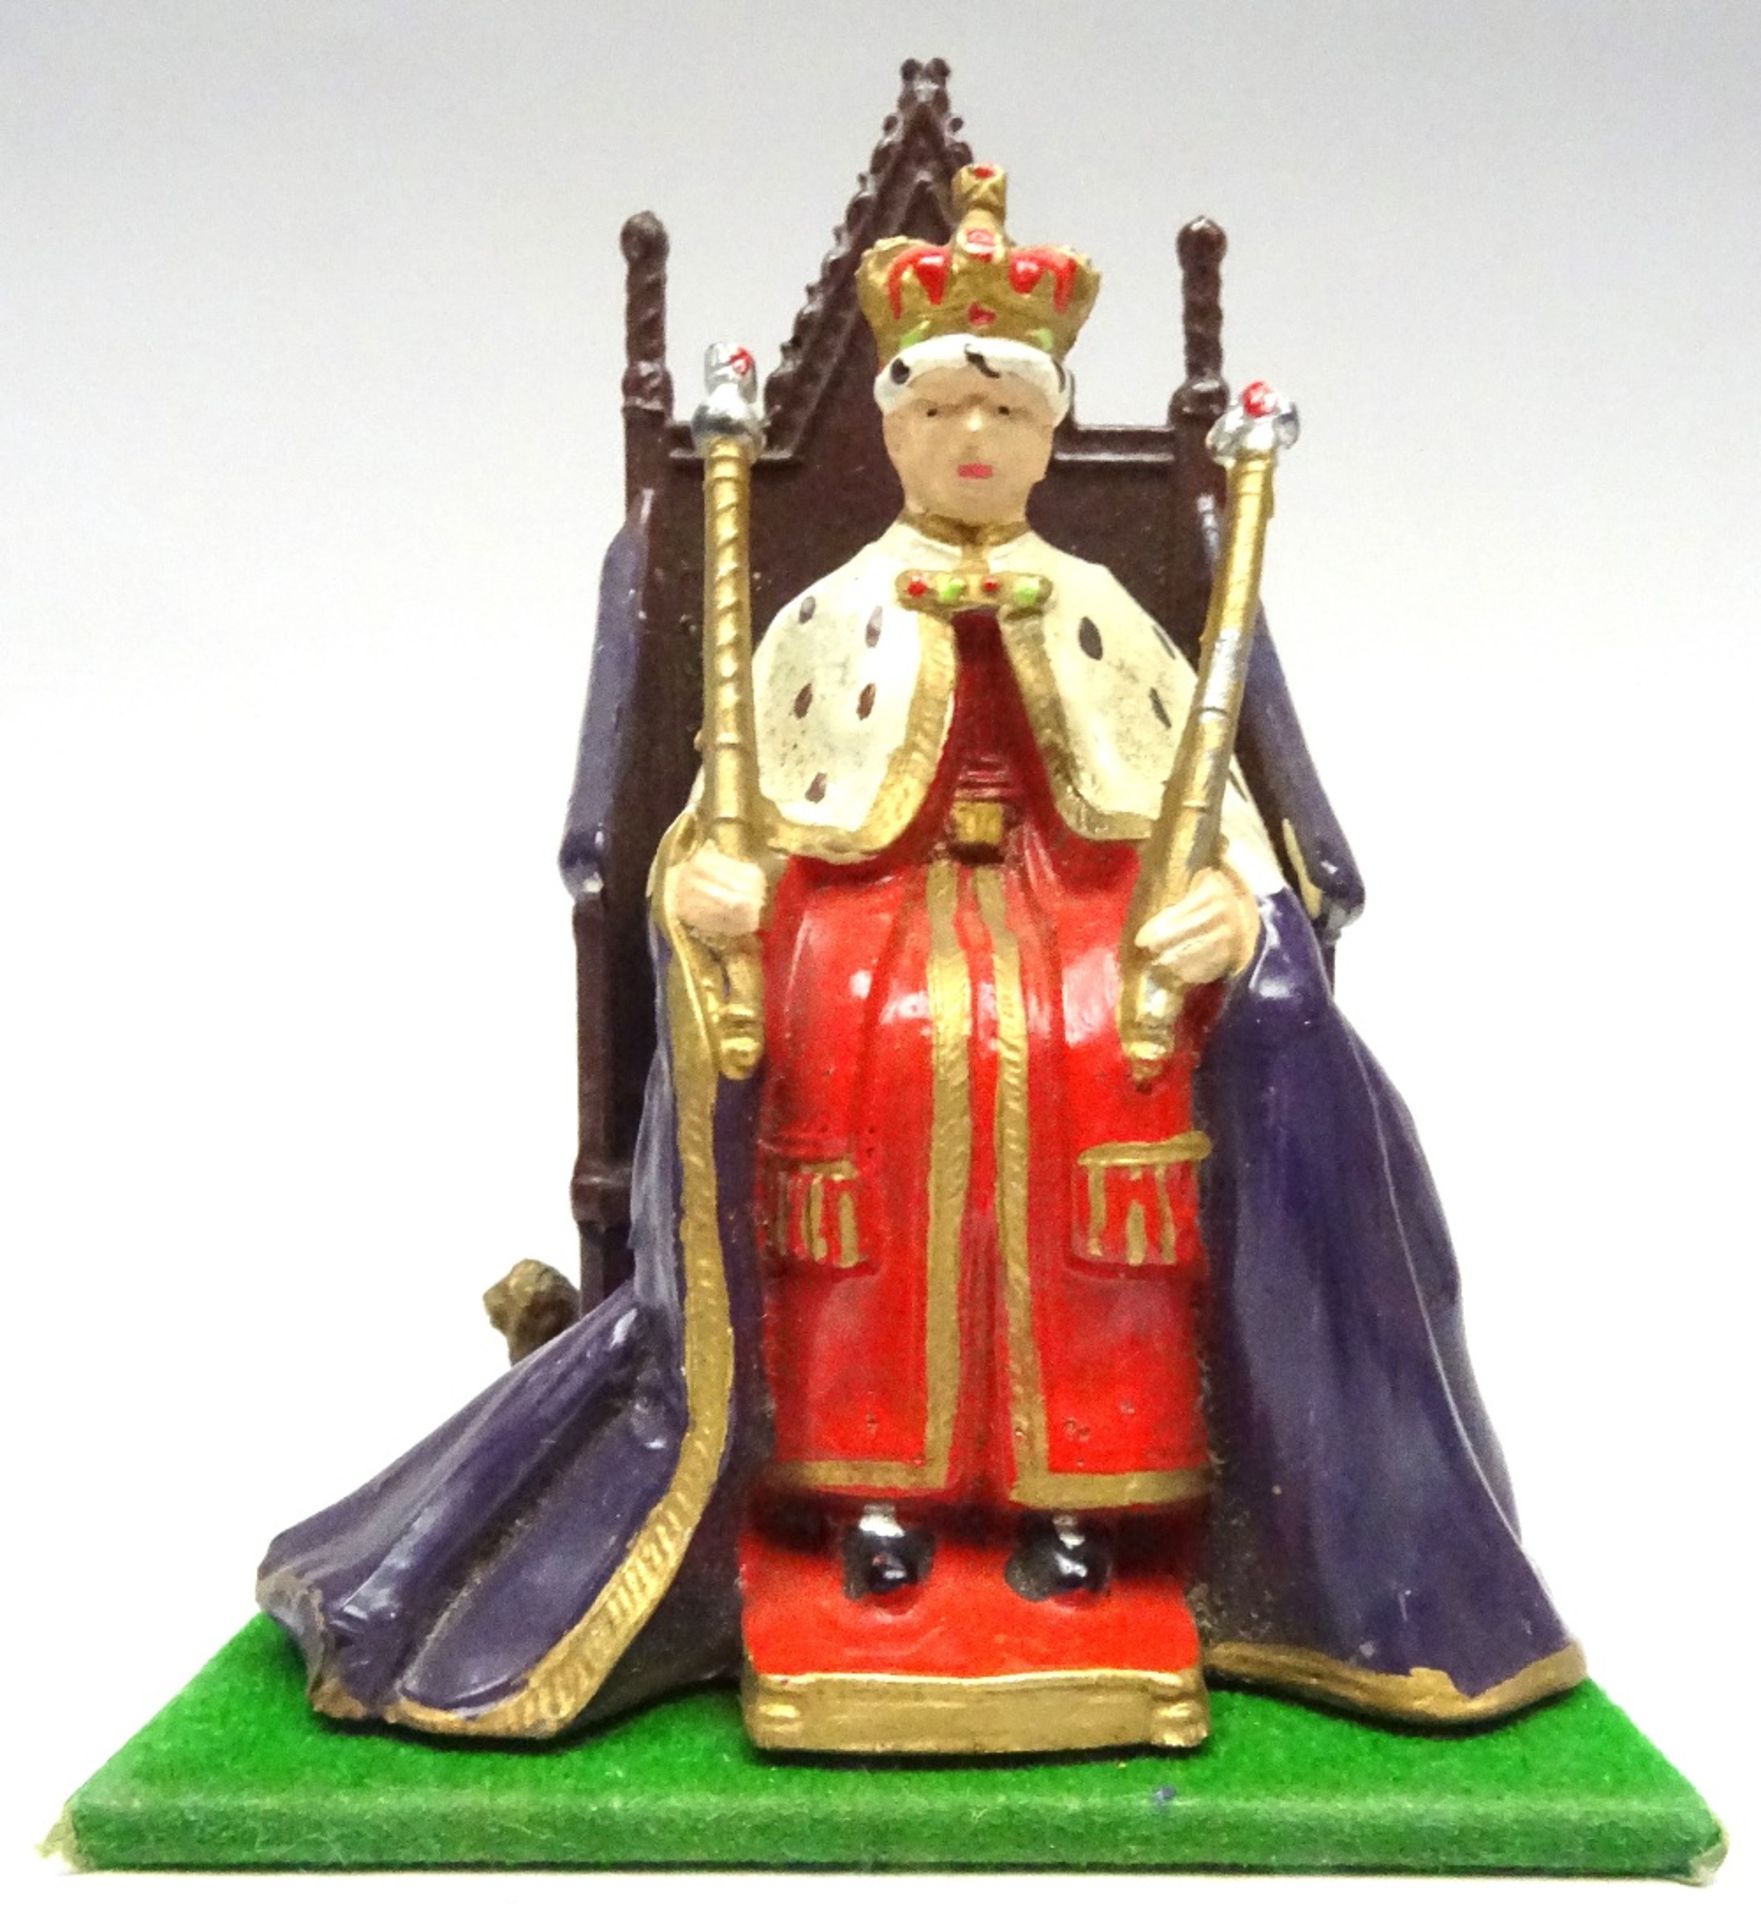 Johillco RARE souvenir figure of King George VI on Coronation Chair - Image 3 of 6